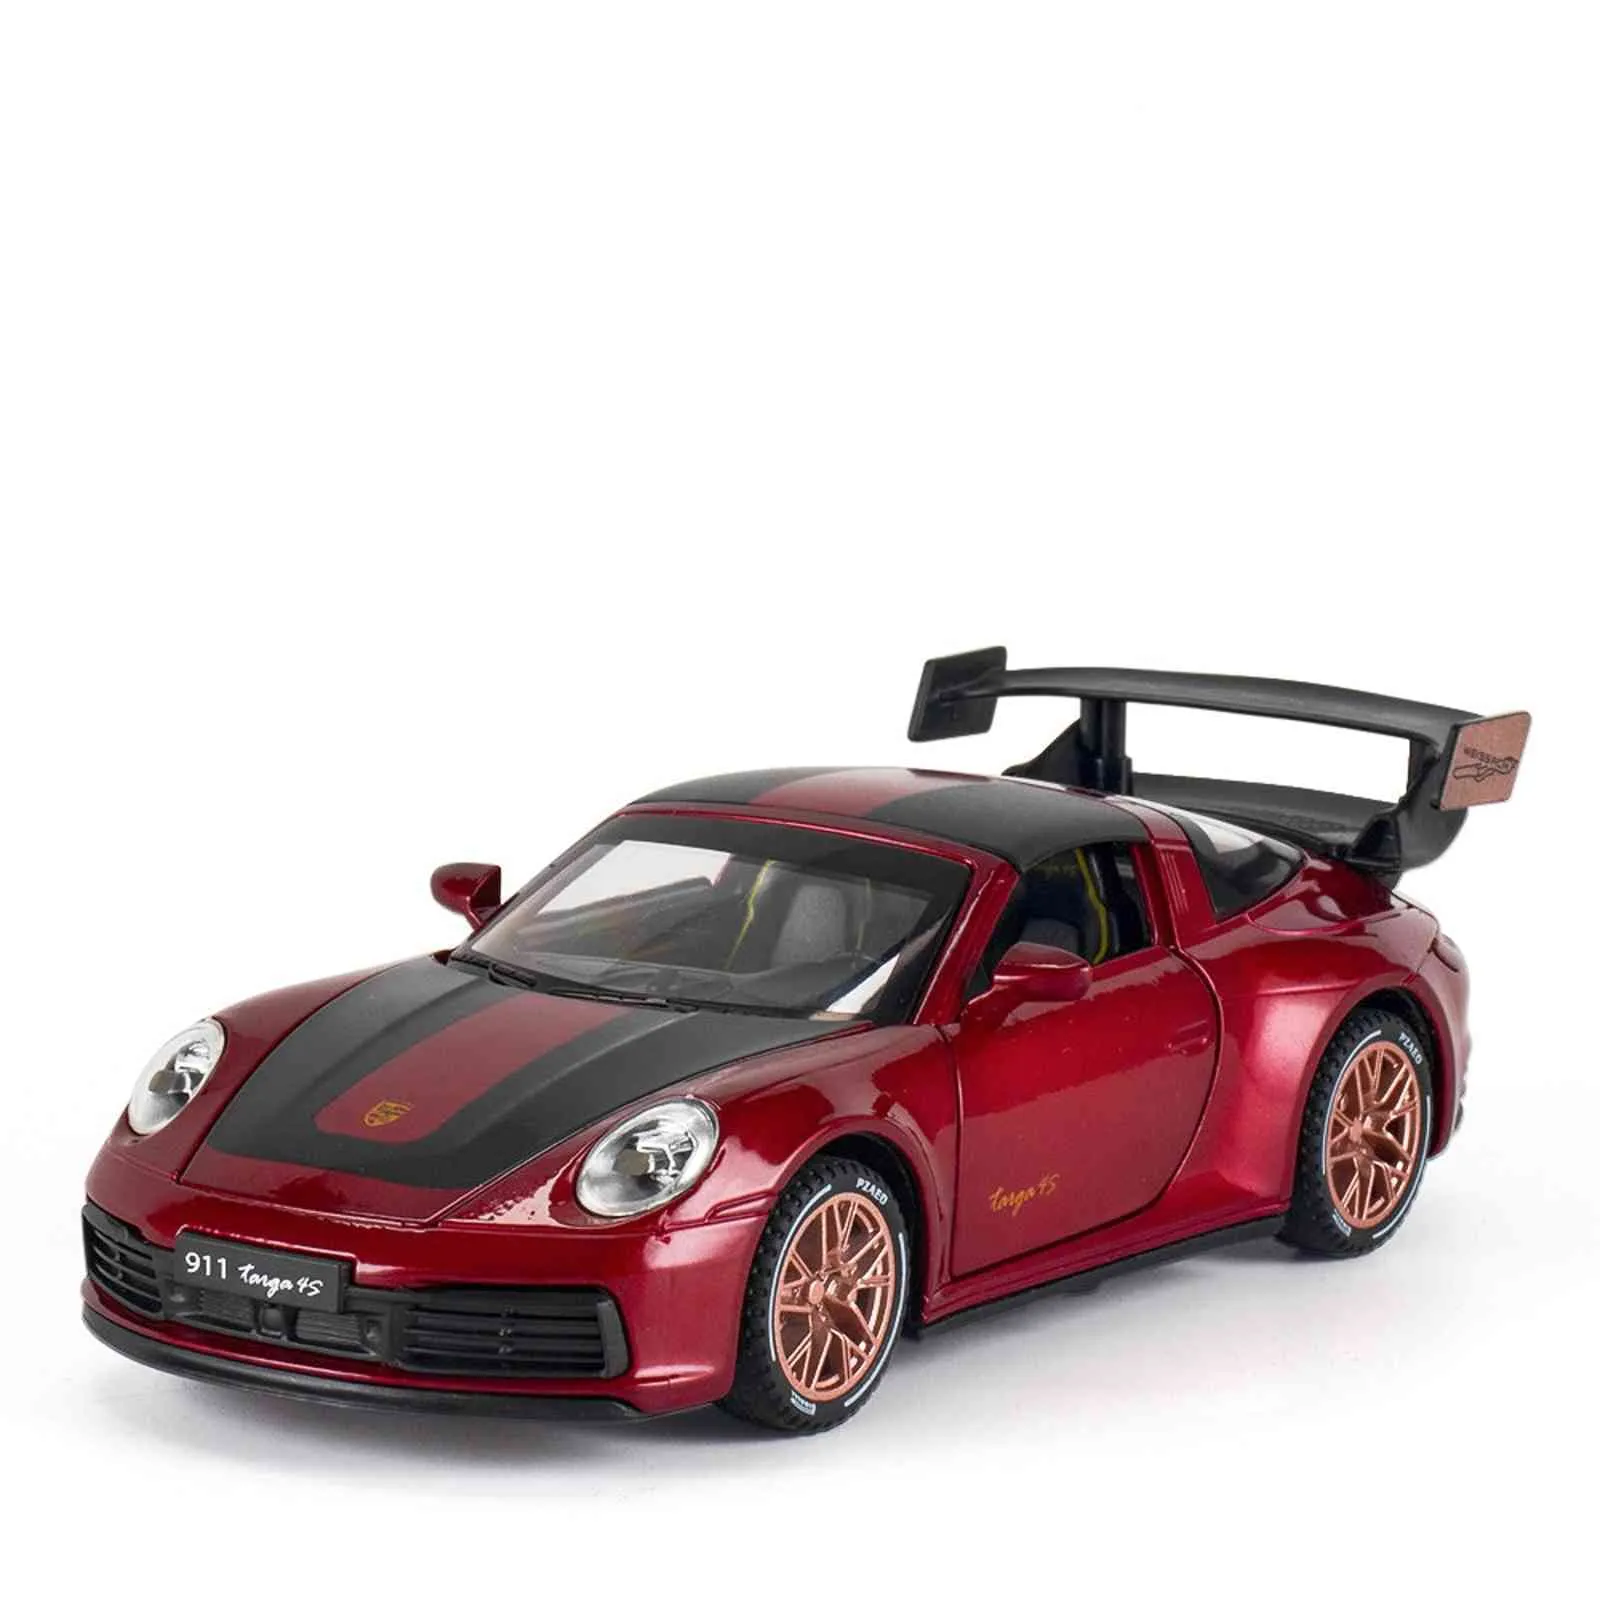 Alley Sports Car, Model Force Control, Toy Collection, 1:32, Porsche 911 Targa 4s